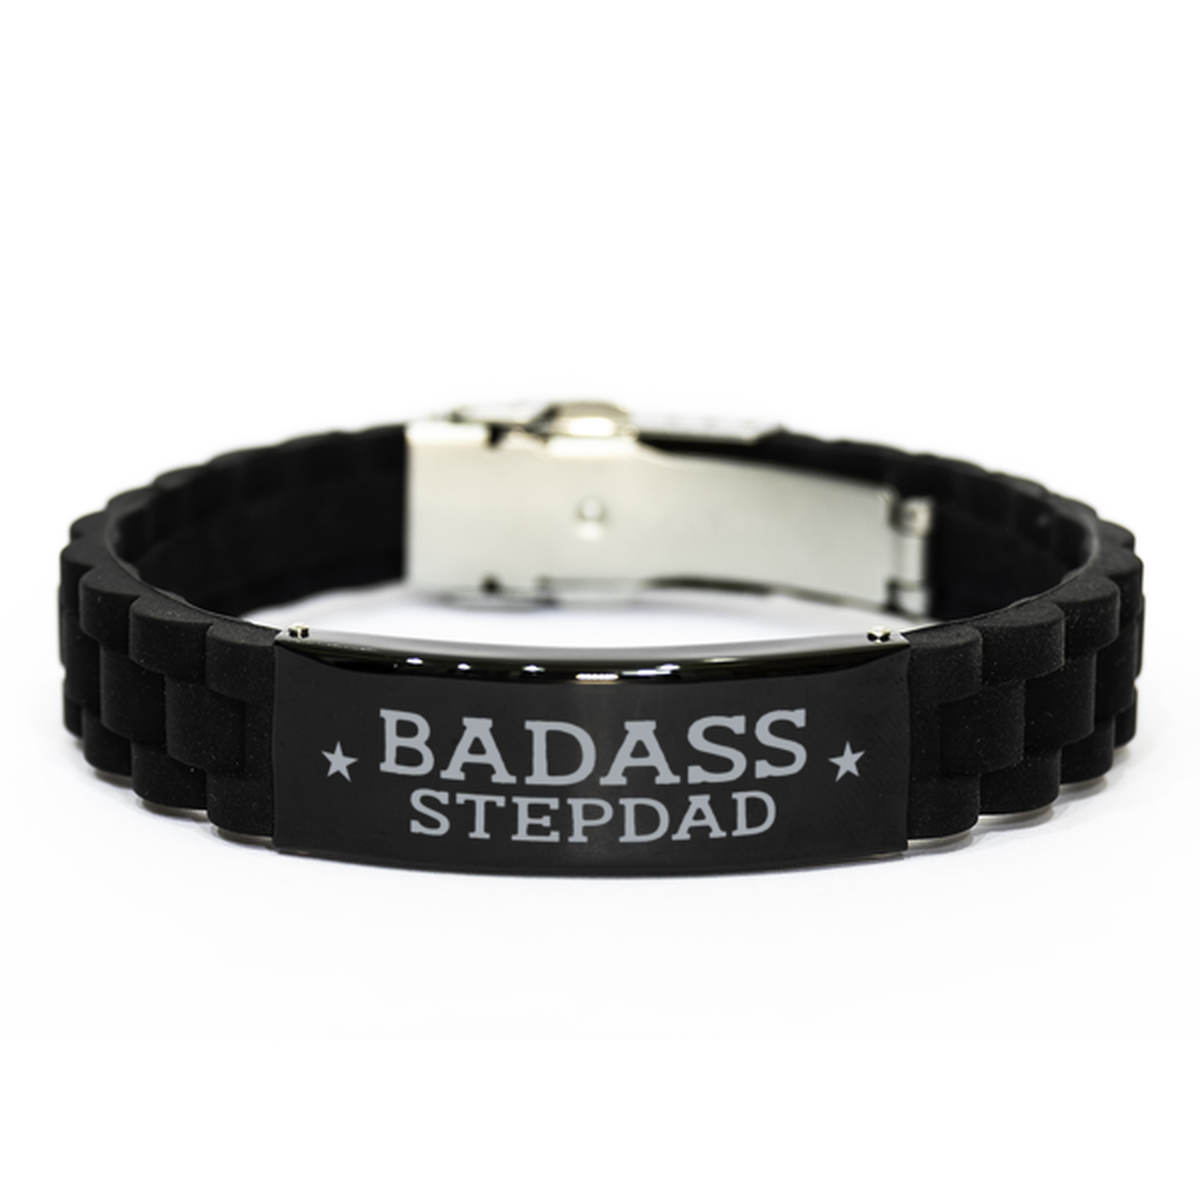 Stepdad Black Bracelet, Badass Stepdad, Funny Family Gifts For Stepdad From Son Daughter